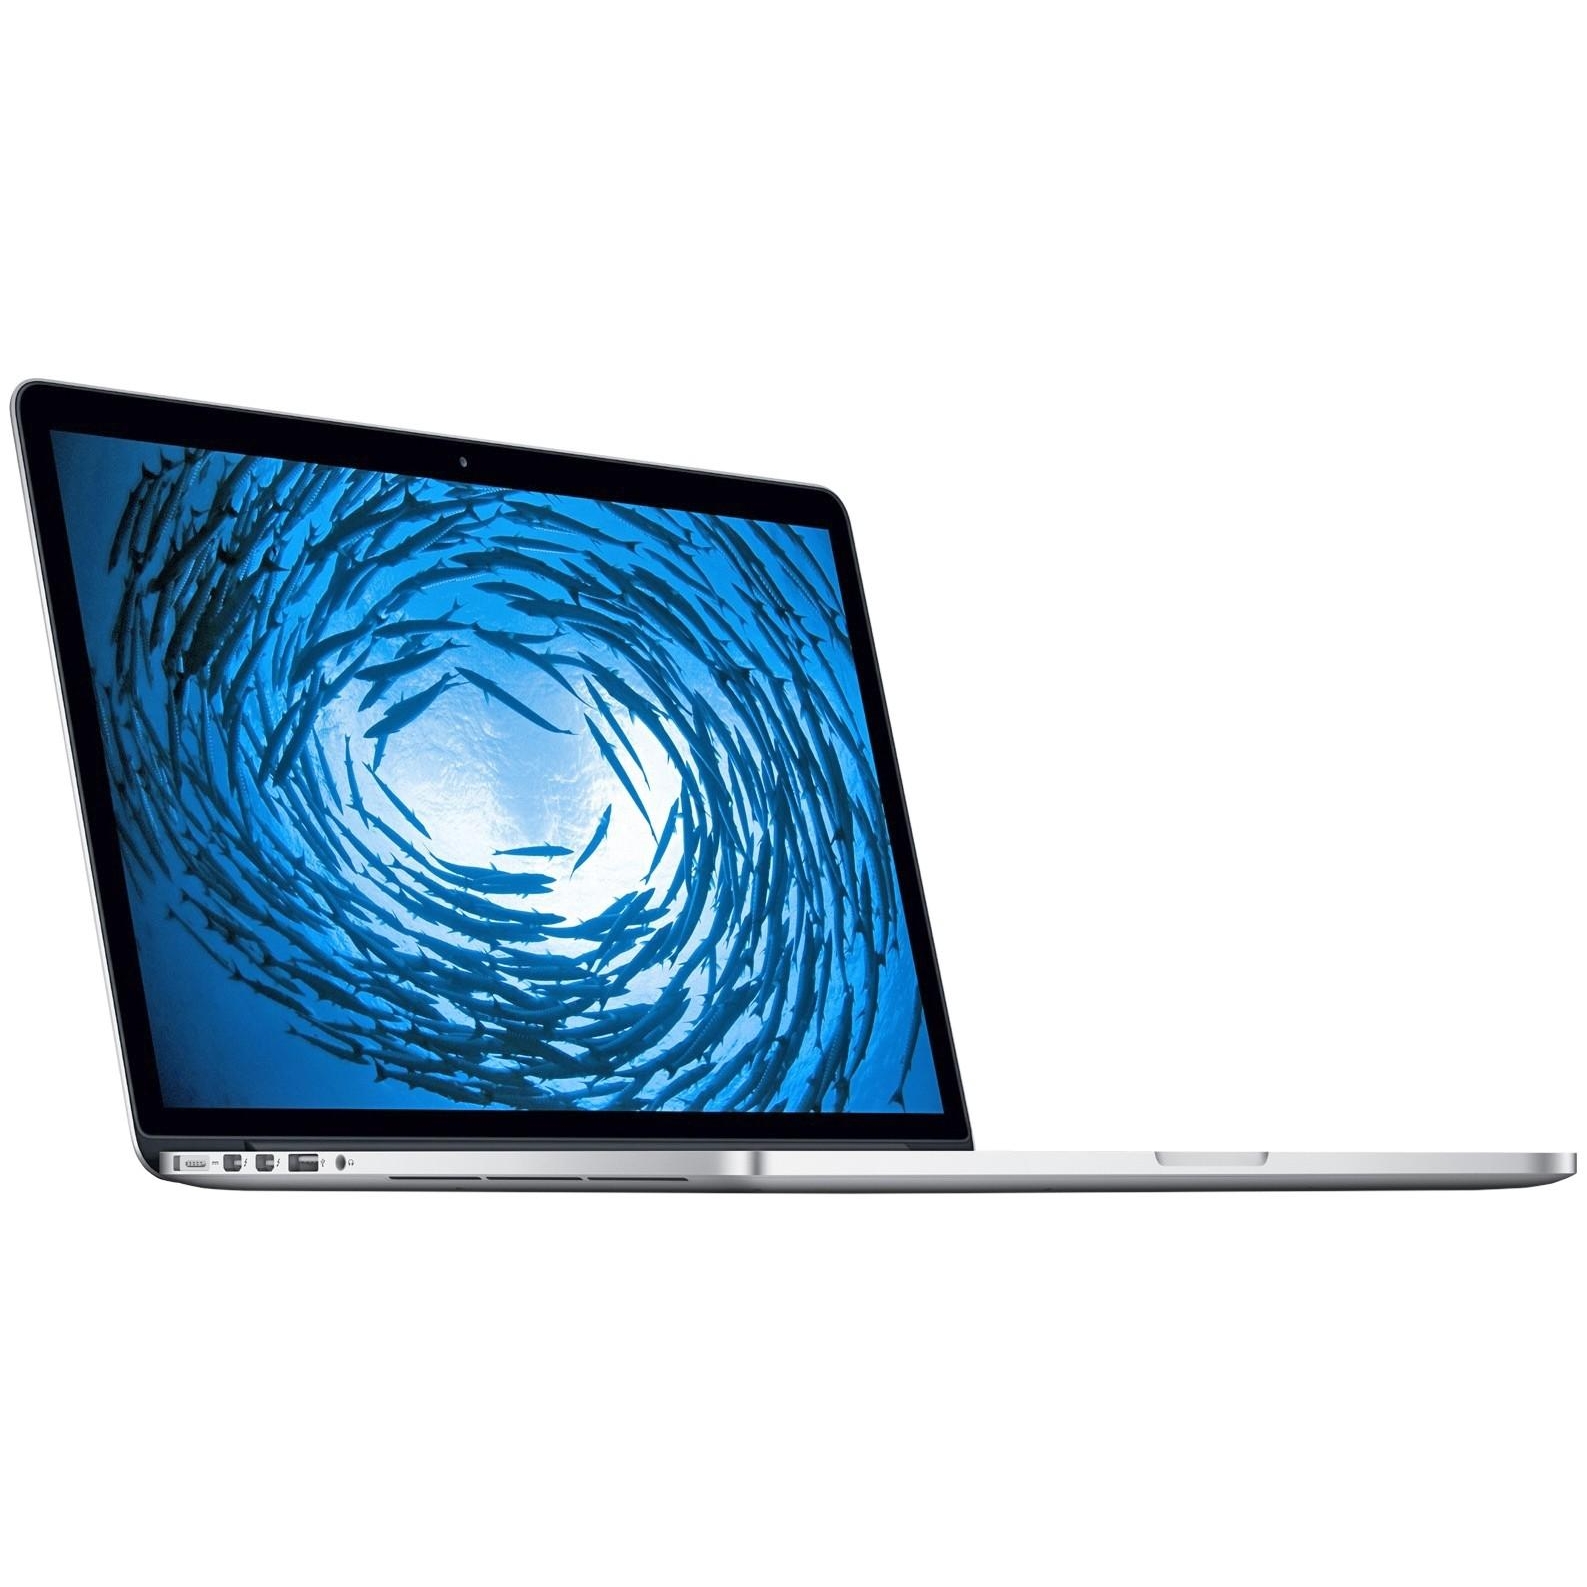 Apple MacBook Pro 15" with Retina display (ME294) 2013 - зображення 1